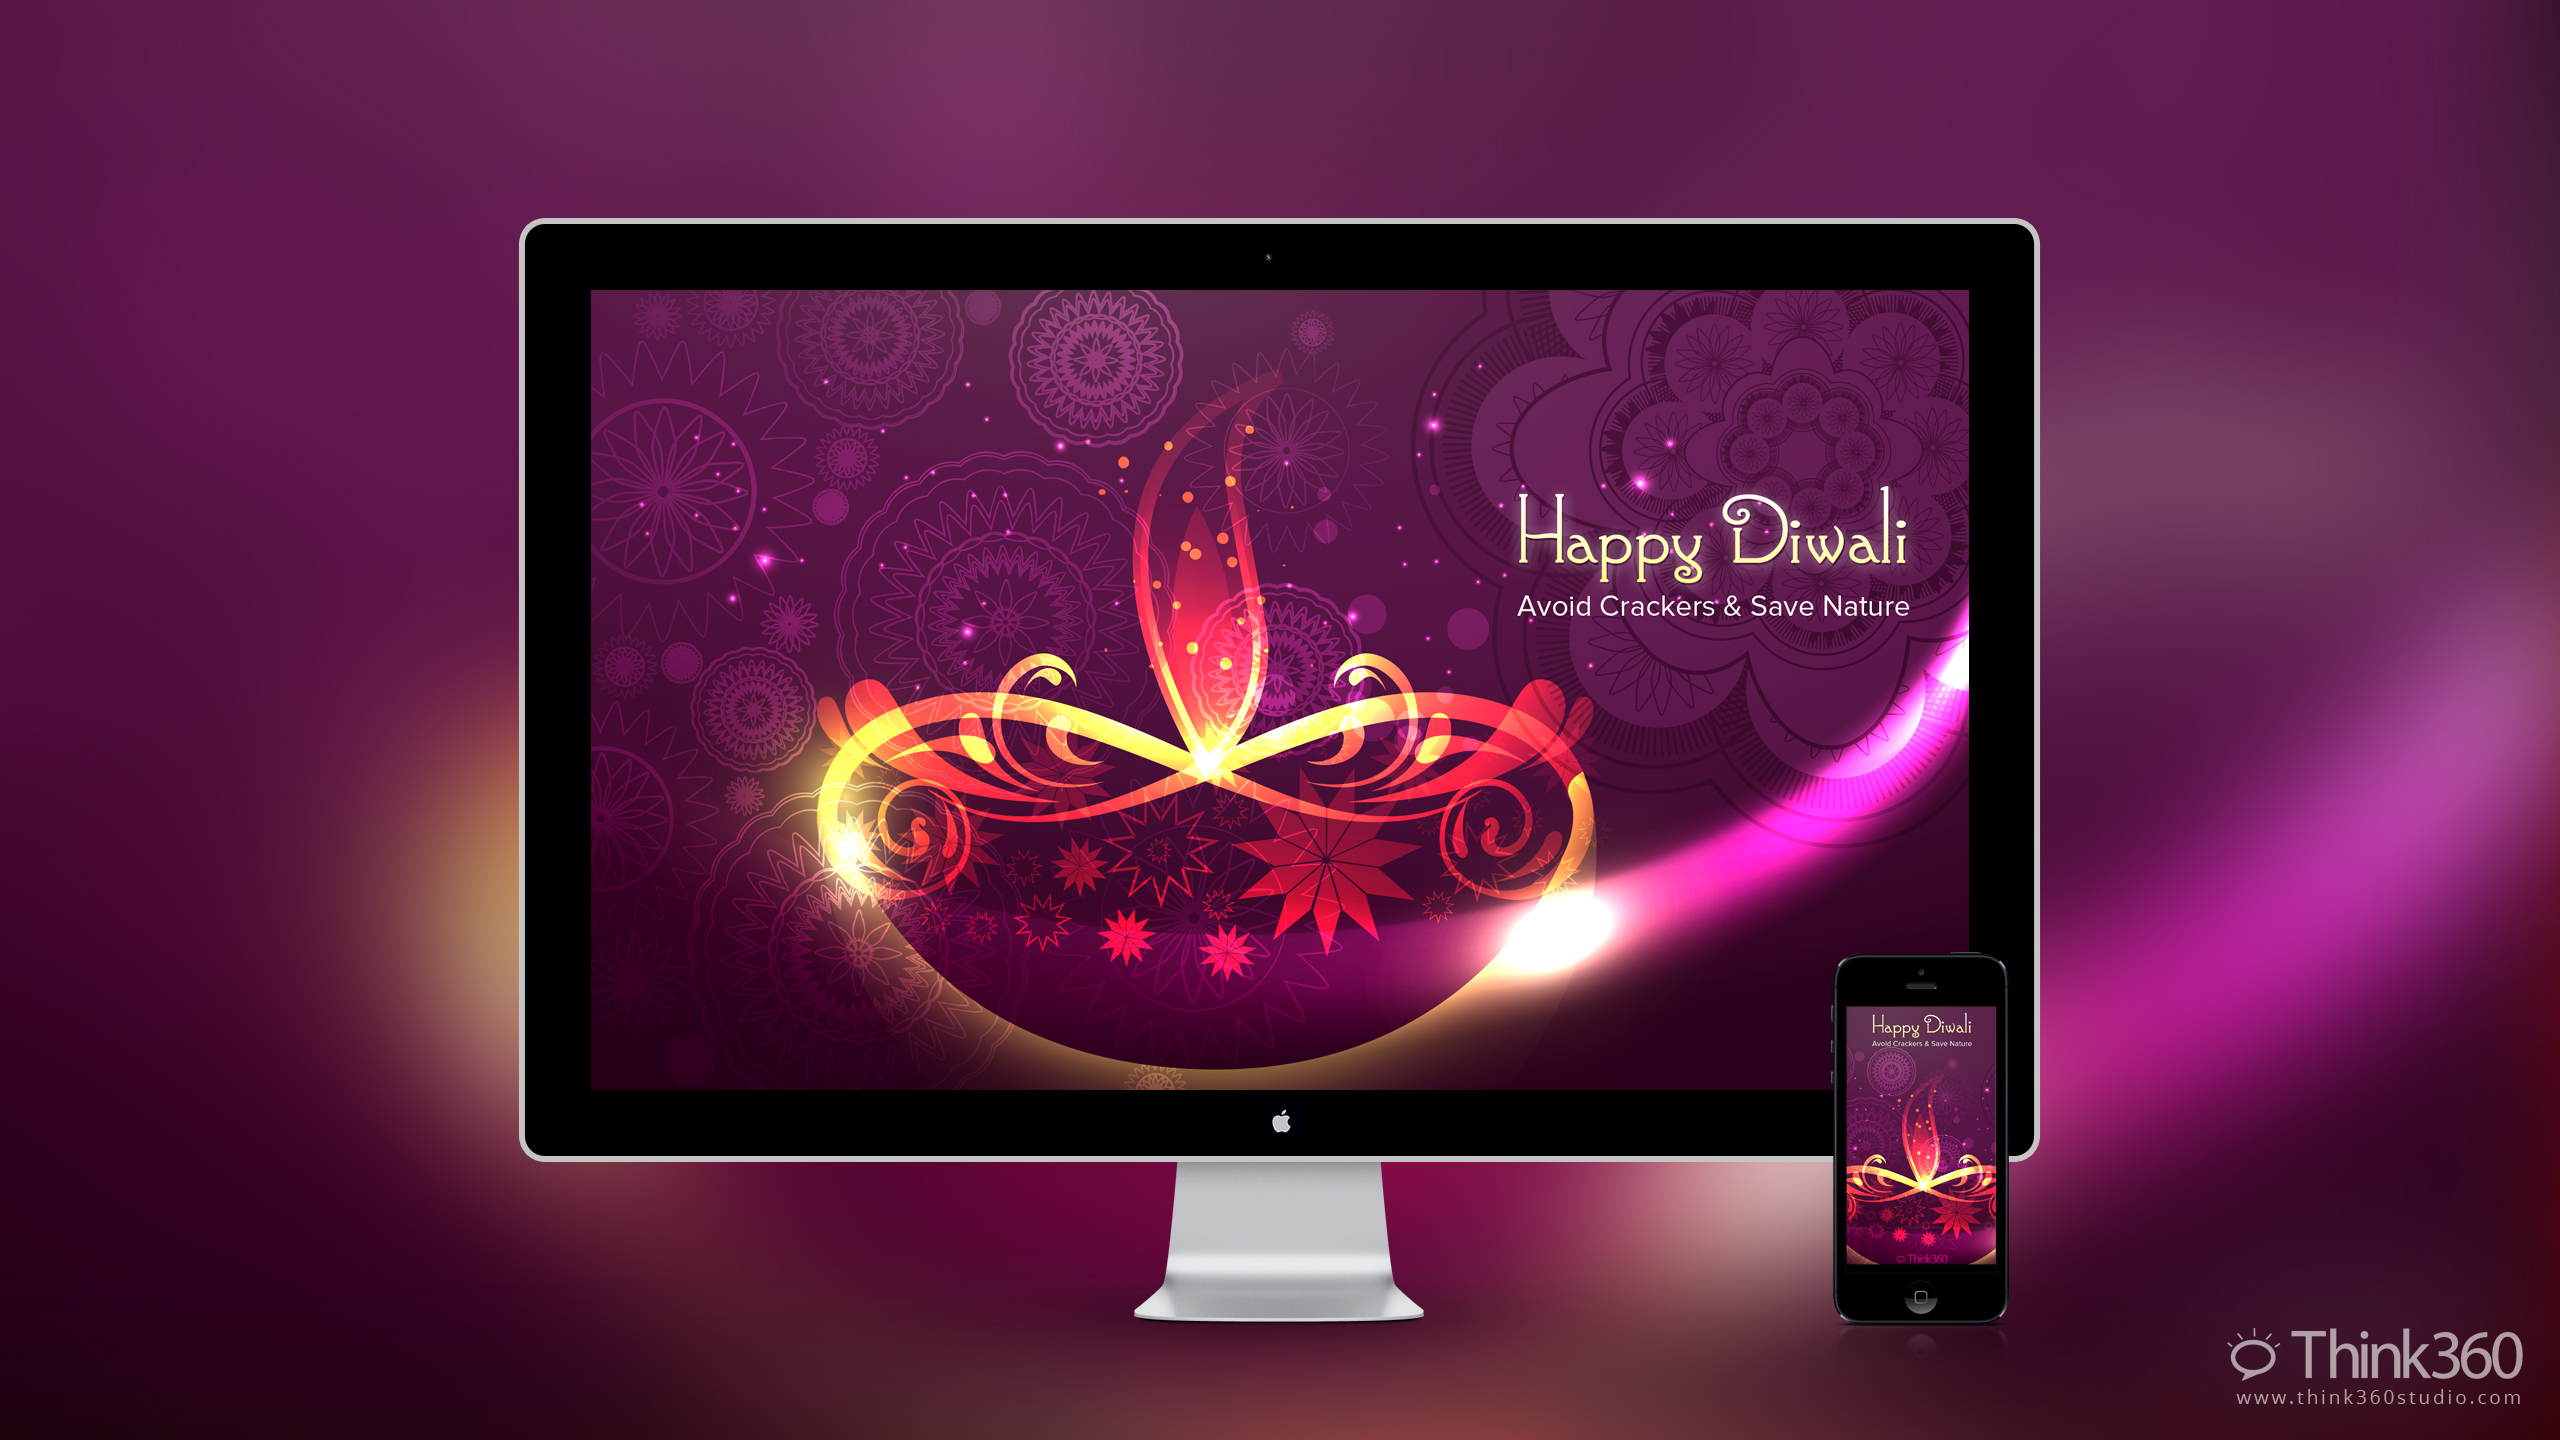 Happy Diwali Wallpaper Pack 2013 By Prince Pal by princepal on DeviantArt